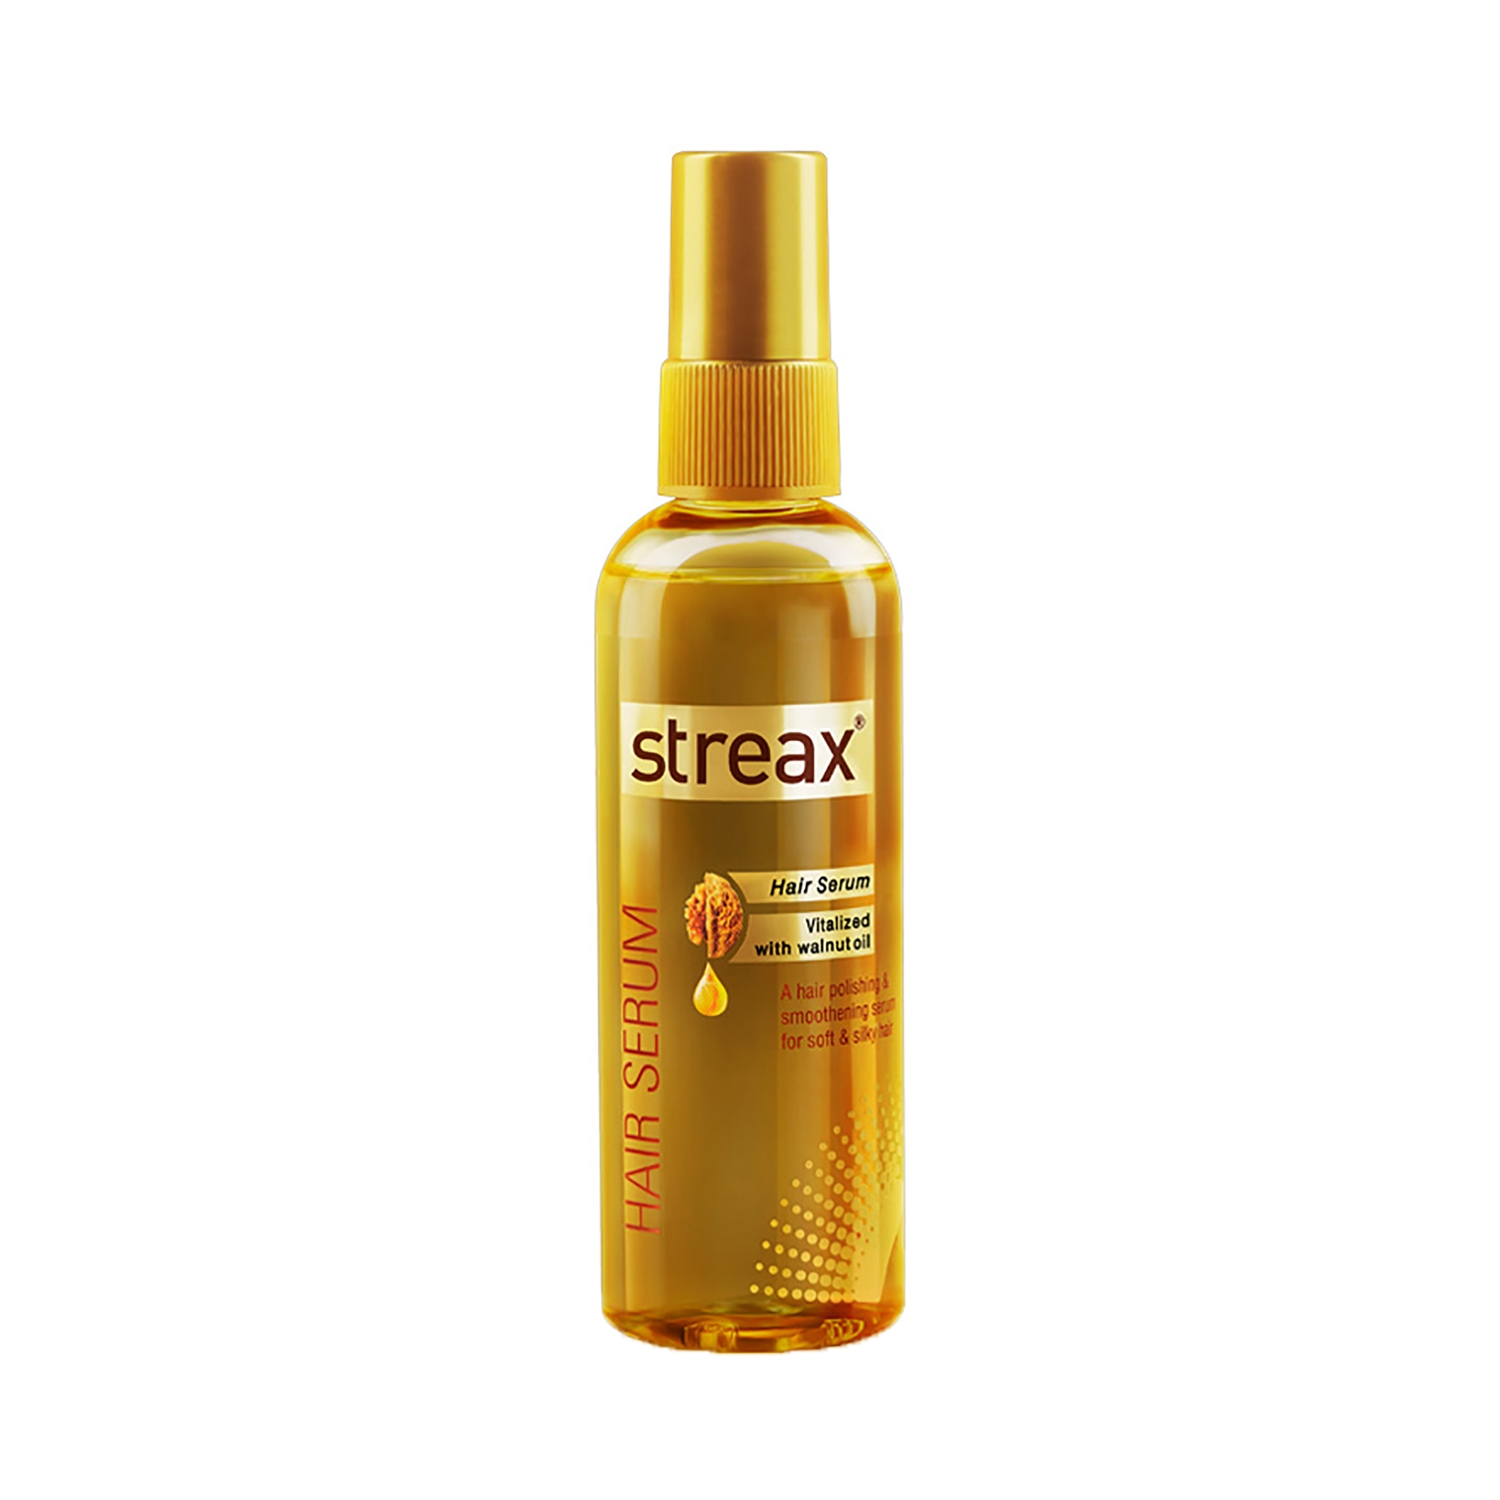 Streax | Streax Hair Serum Vitalized With Walnut Oil For Hair Smoothening & Shine (200ml)